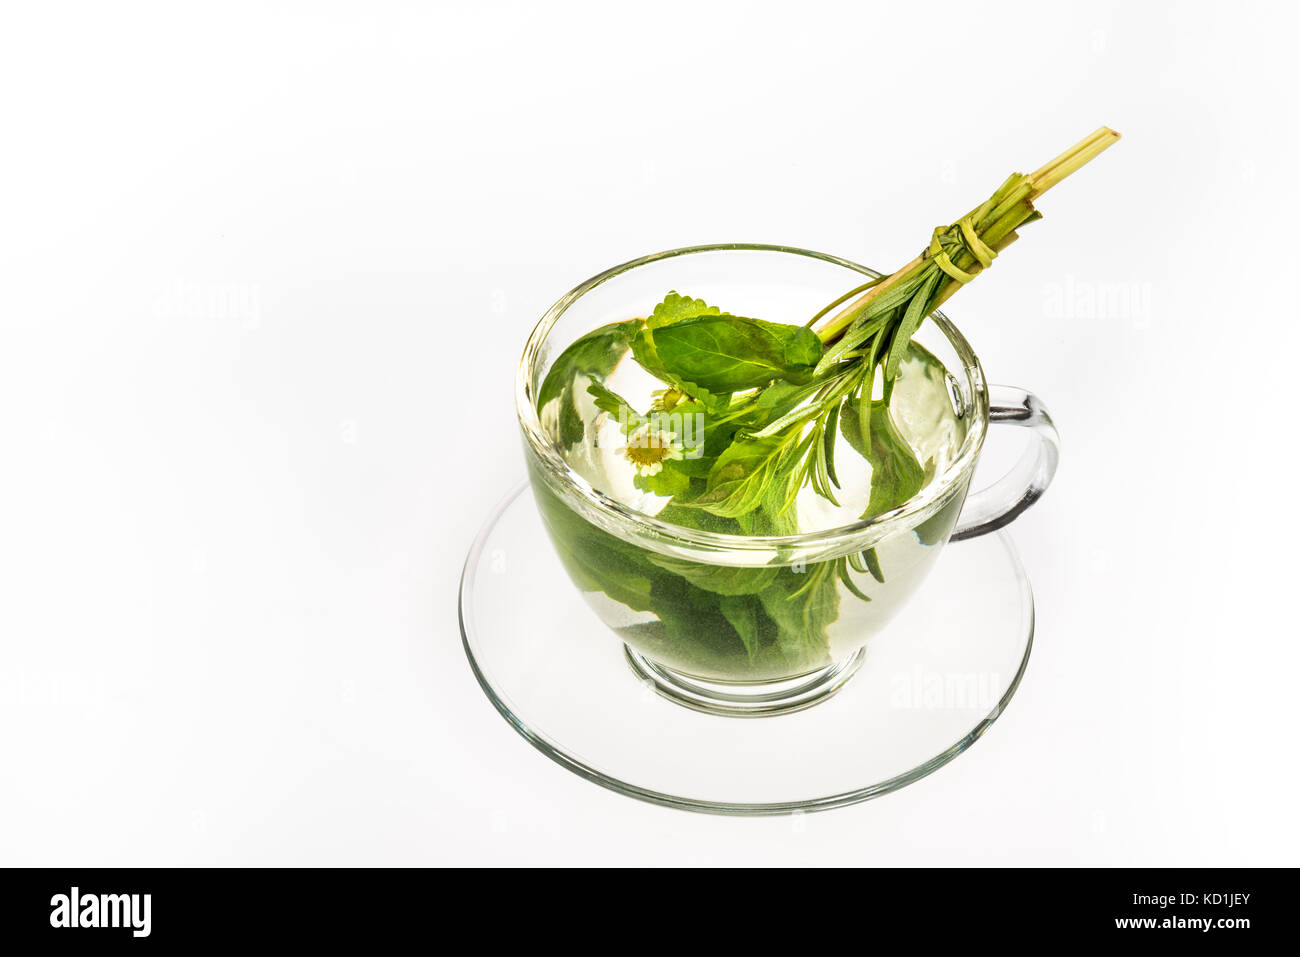 prepare an herbal tea with fresh herbs Stock Photo